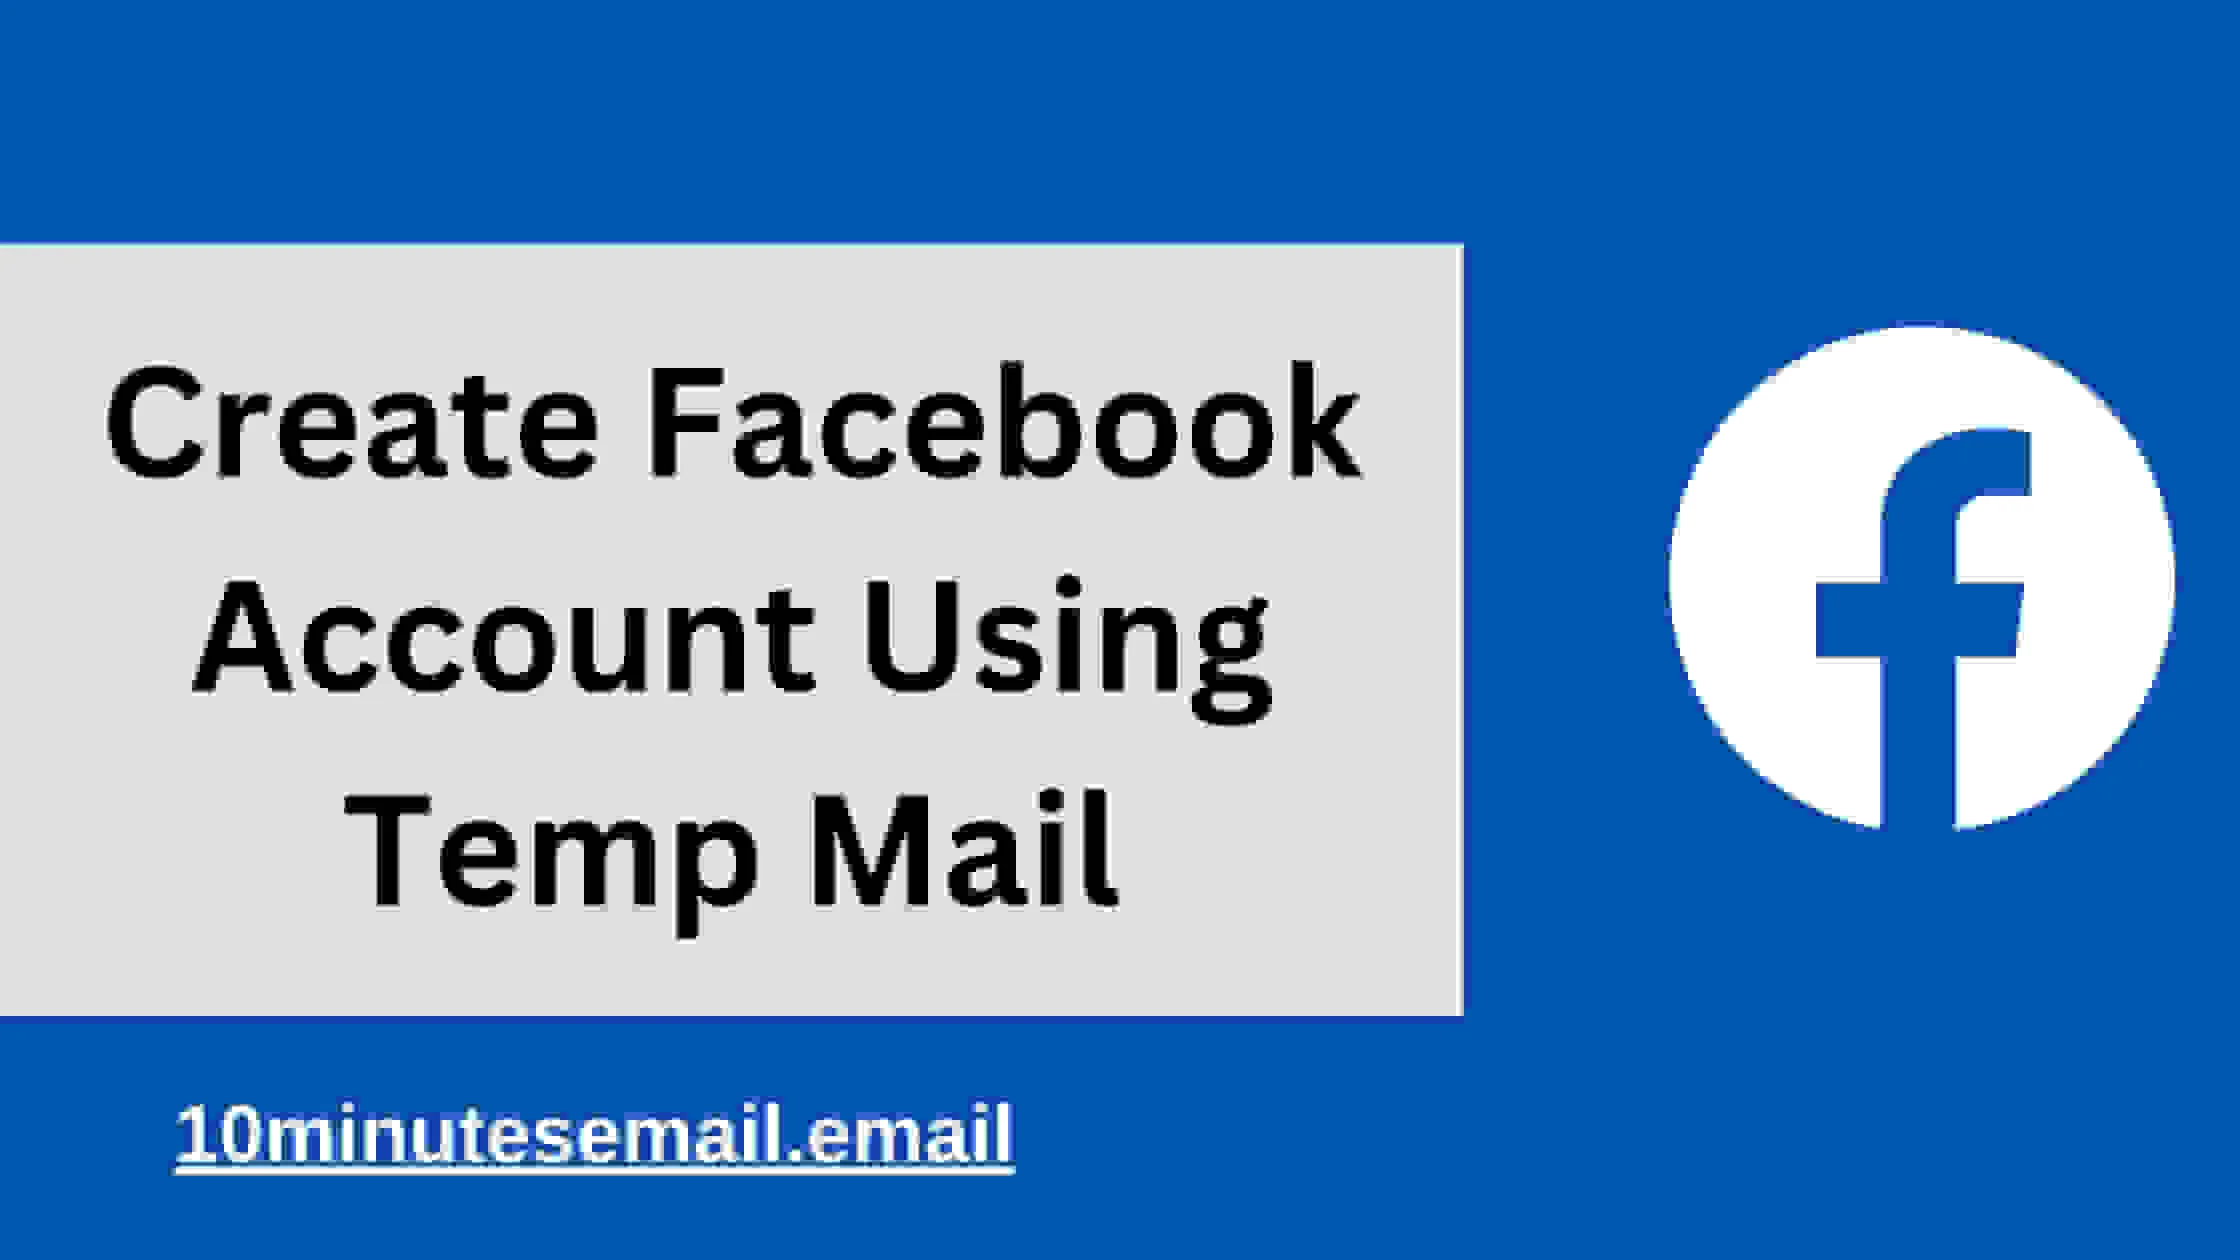 Create Facebook Account Using Temp Mail